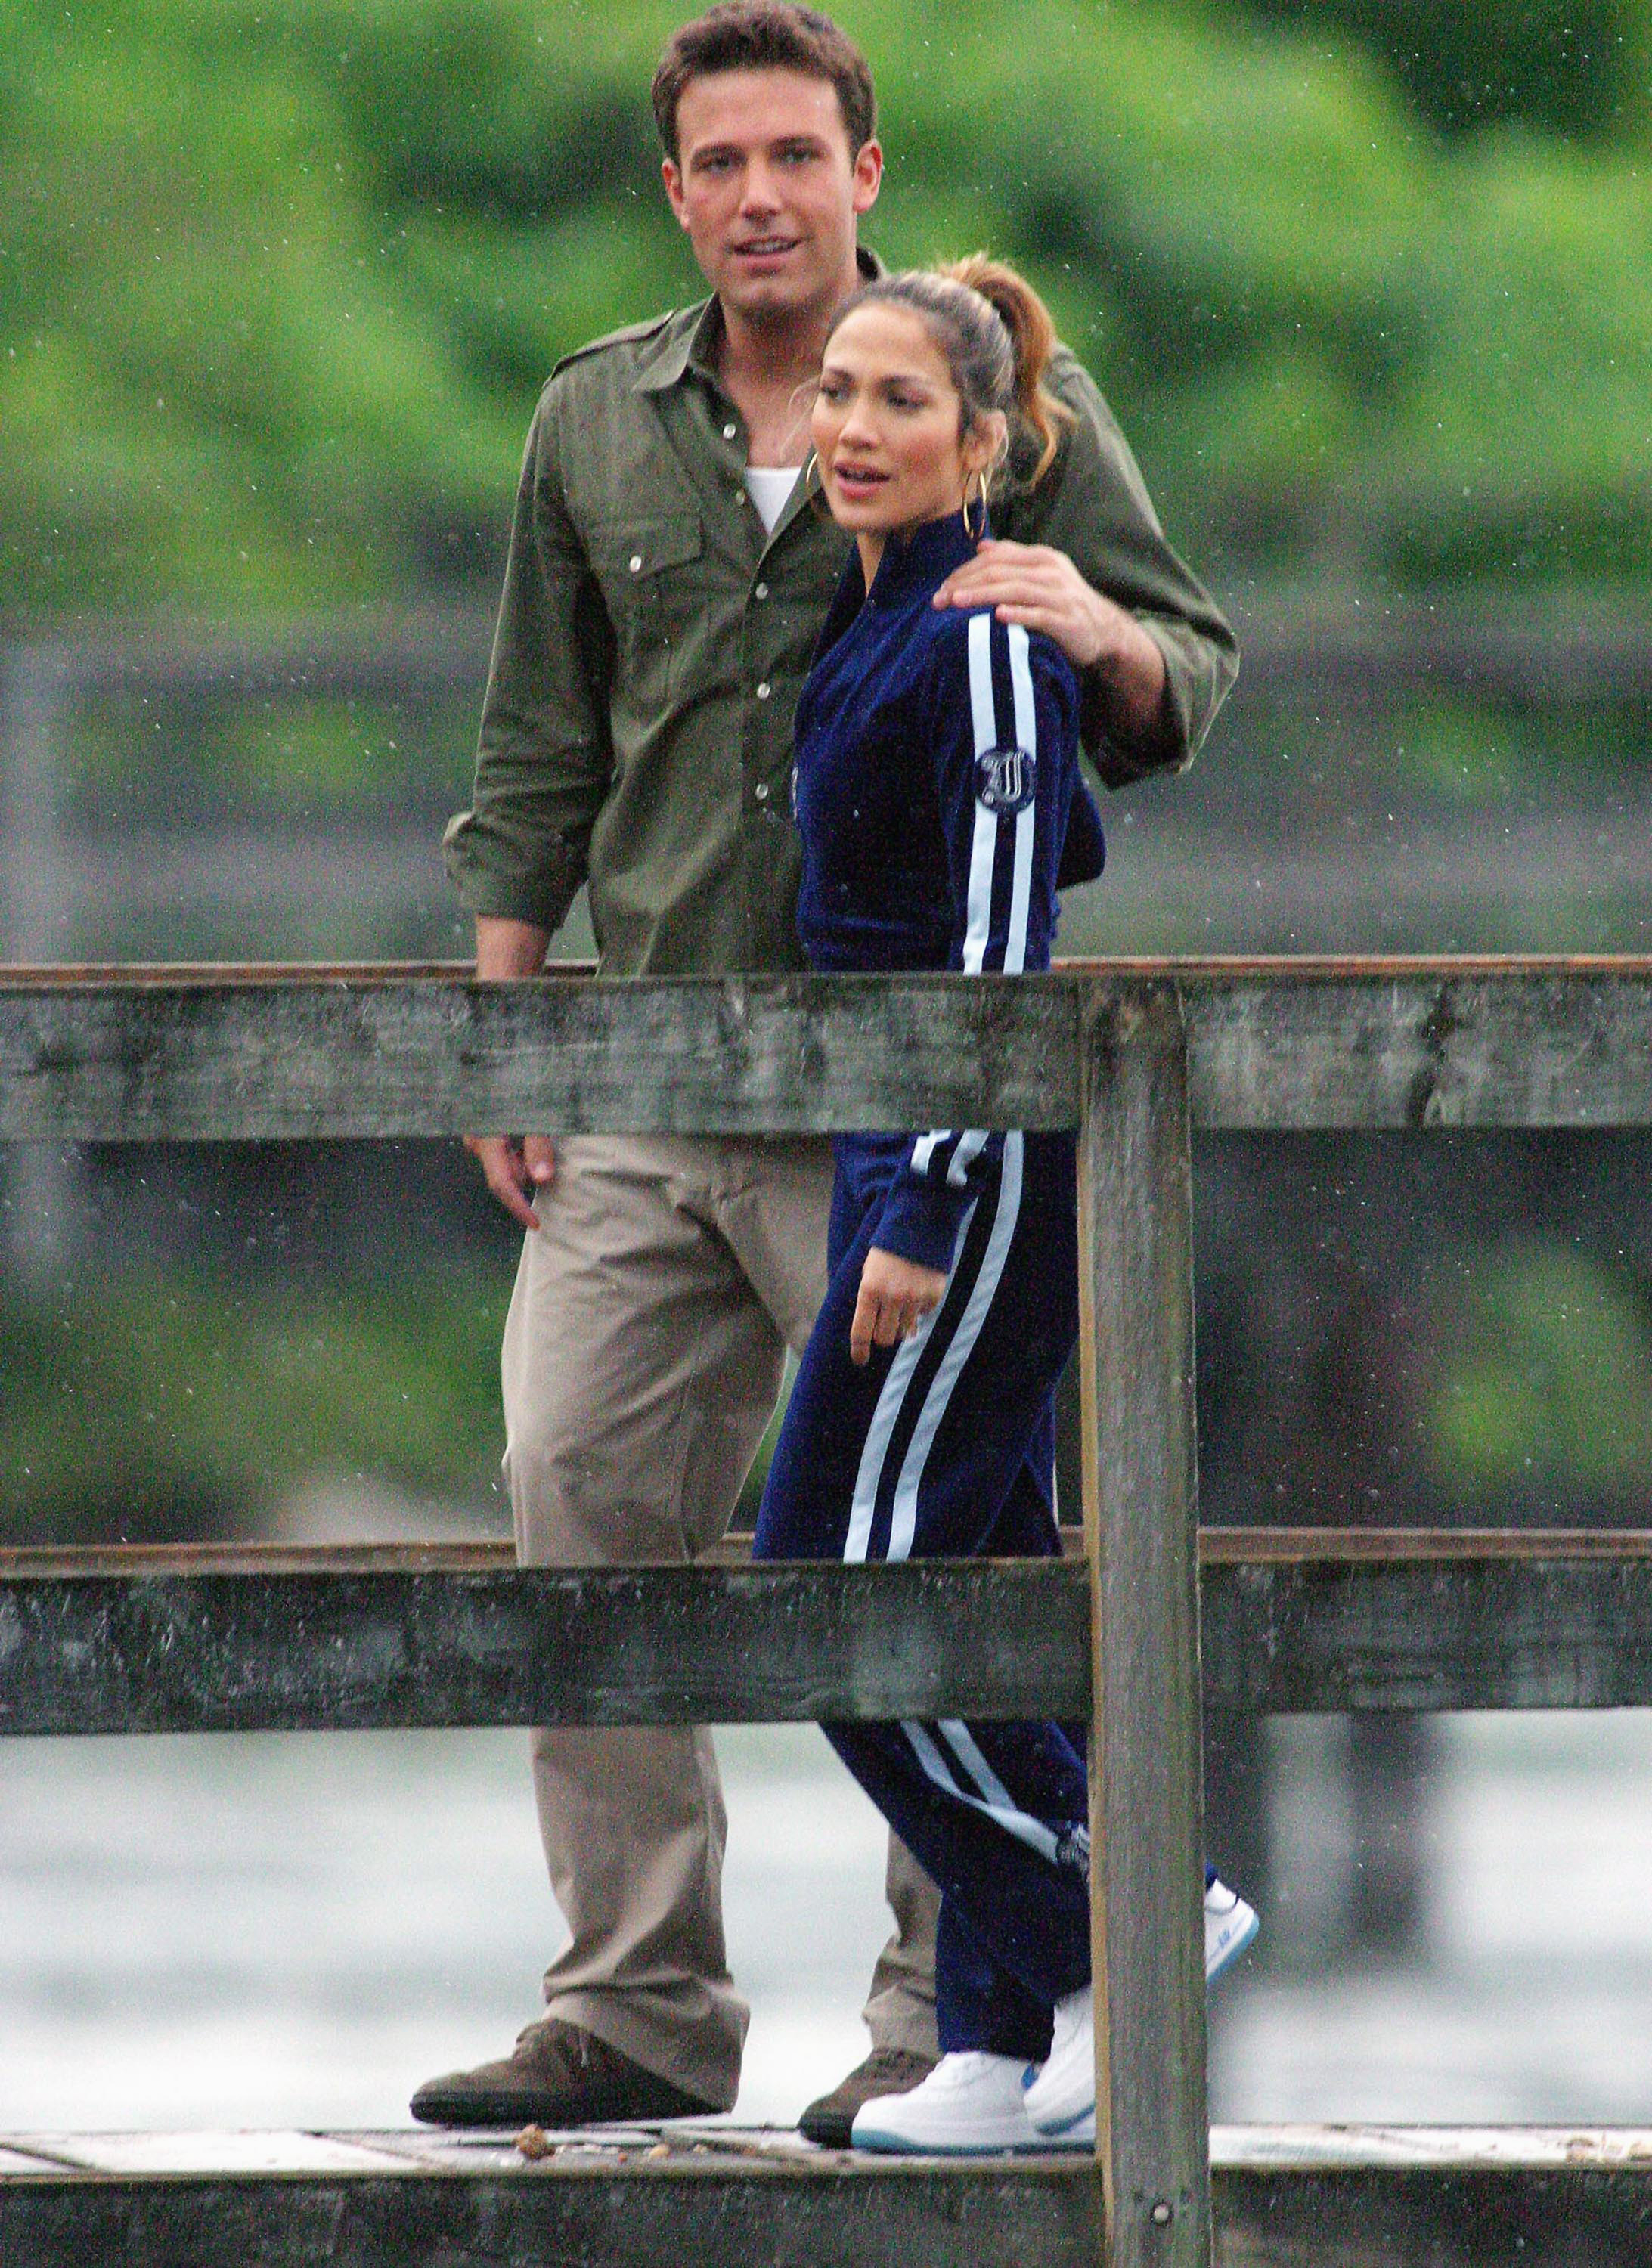 Ben Affleck and Jennifer Lopez walking outside